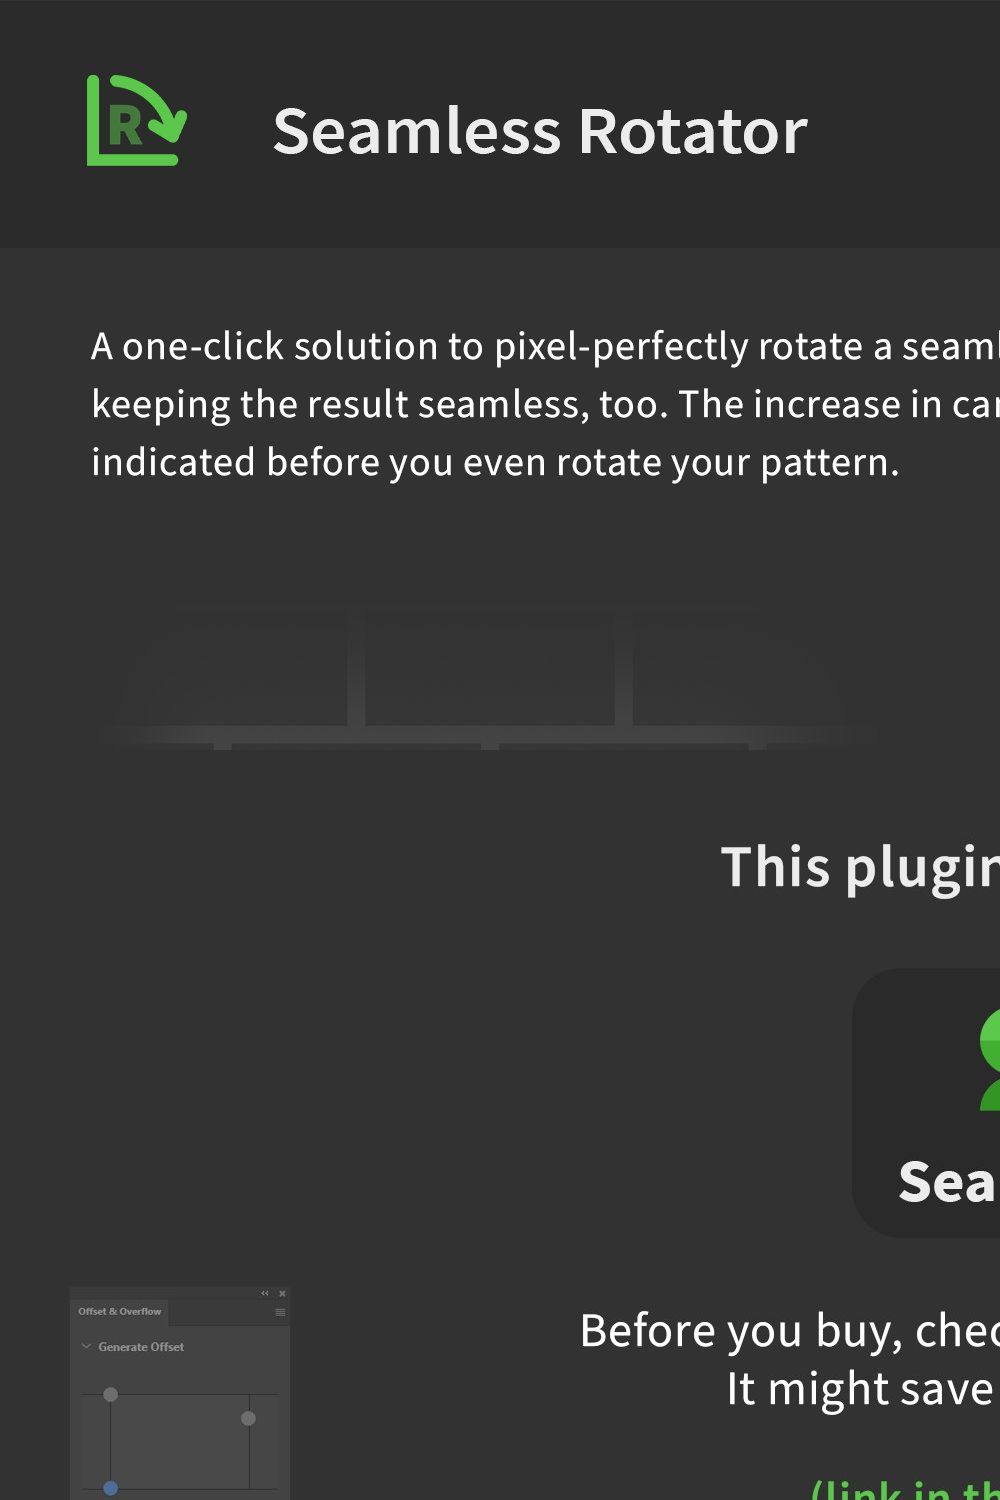 Seamless Rotator pinterest preview image.